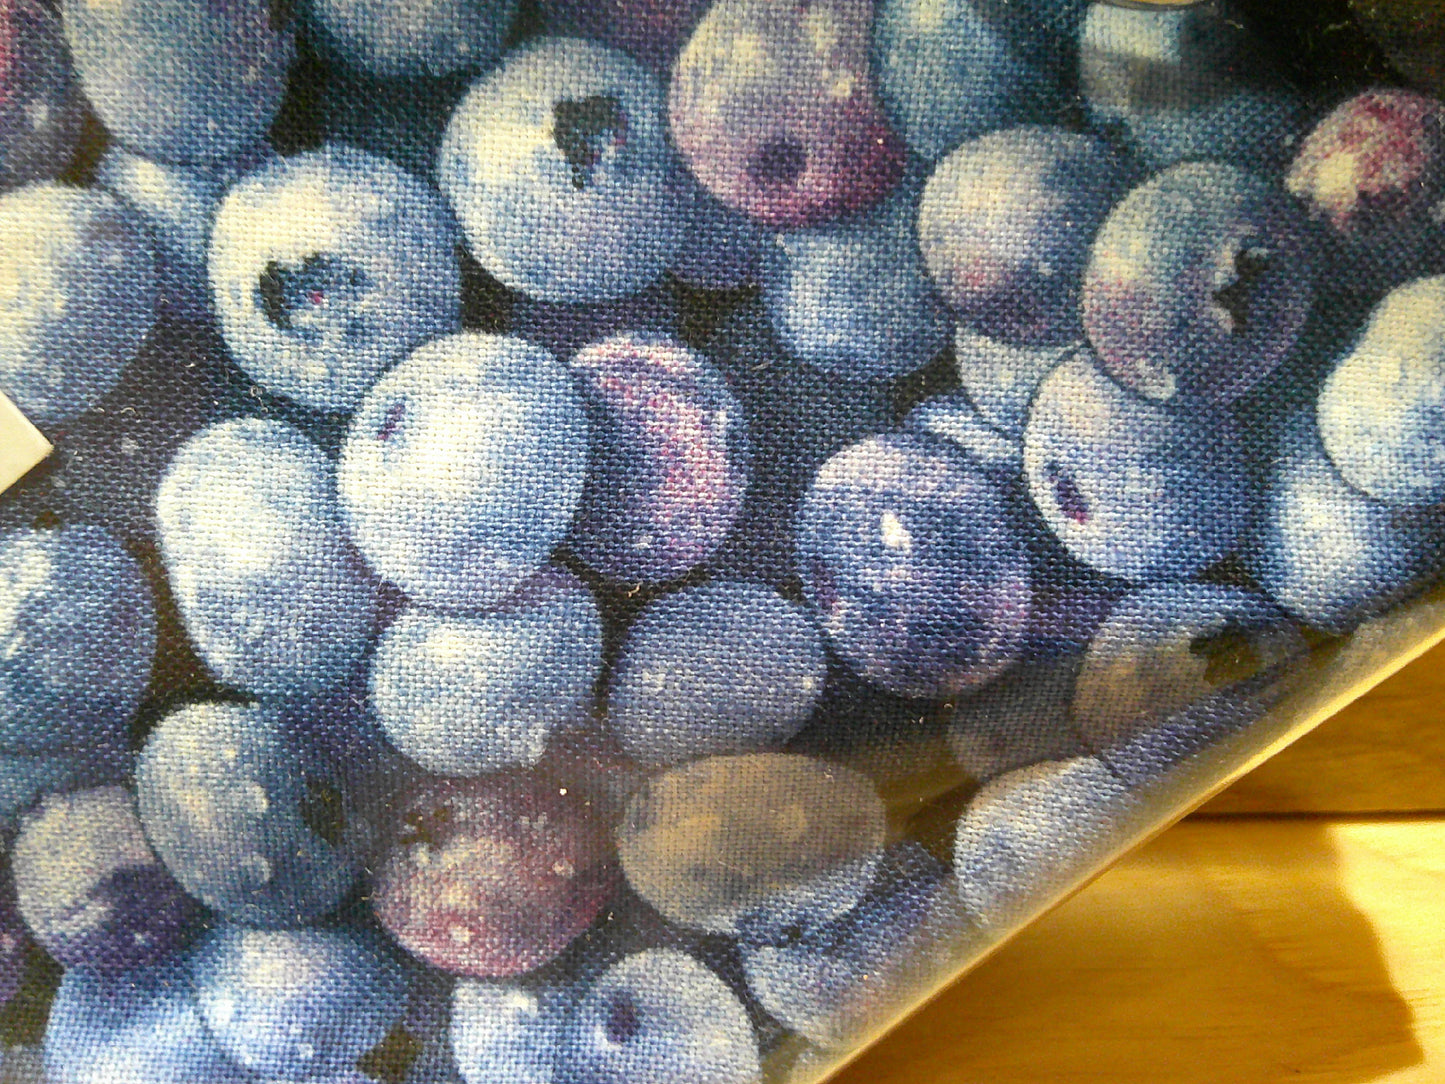 Notion's Bag Blueberries w/ basket weave fabric & blue zipper